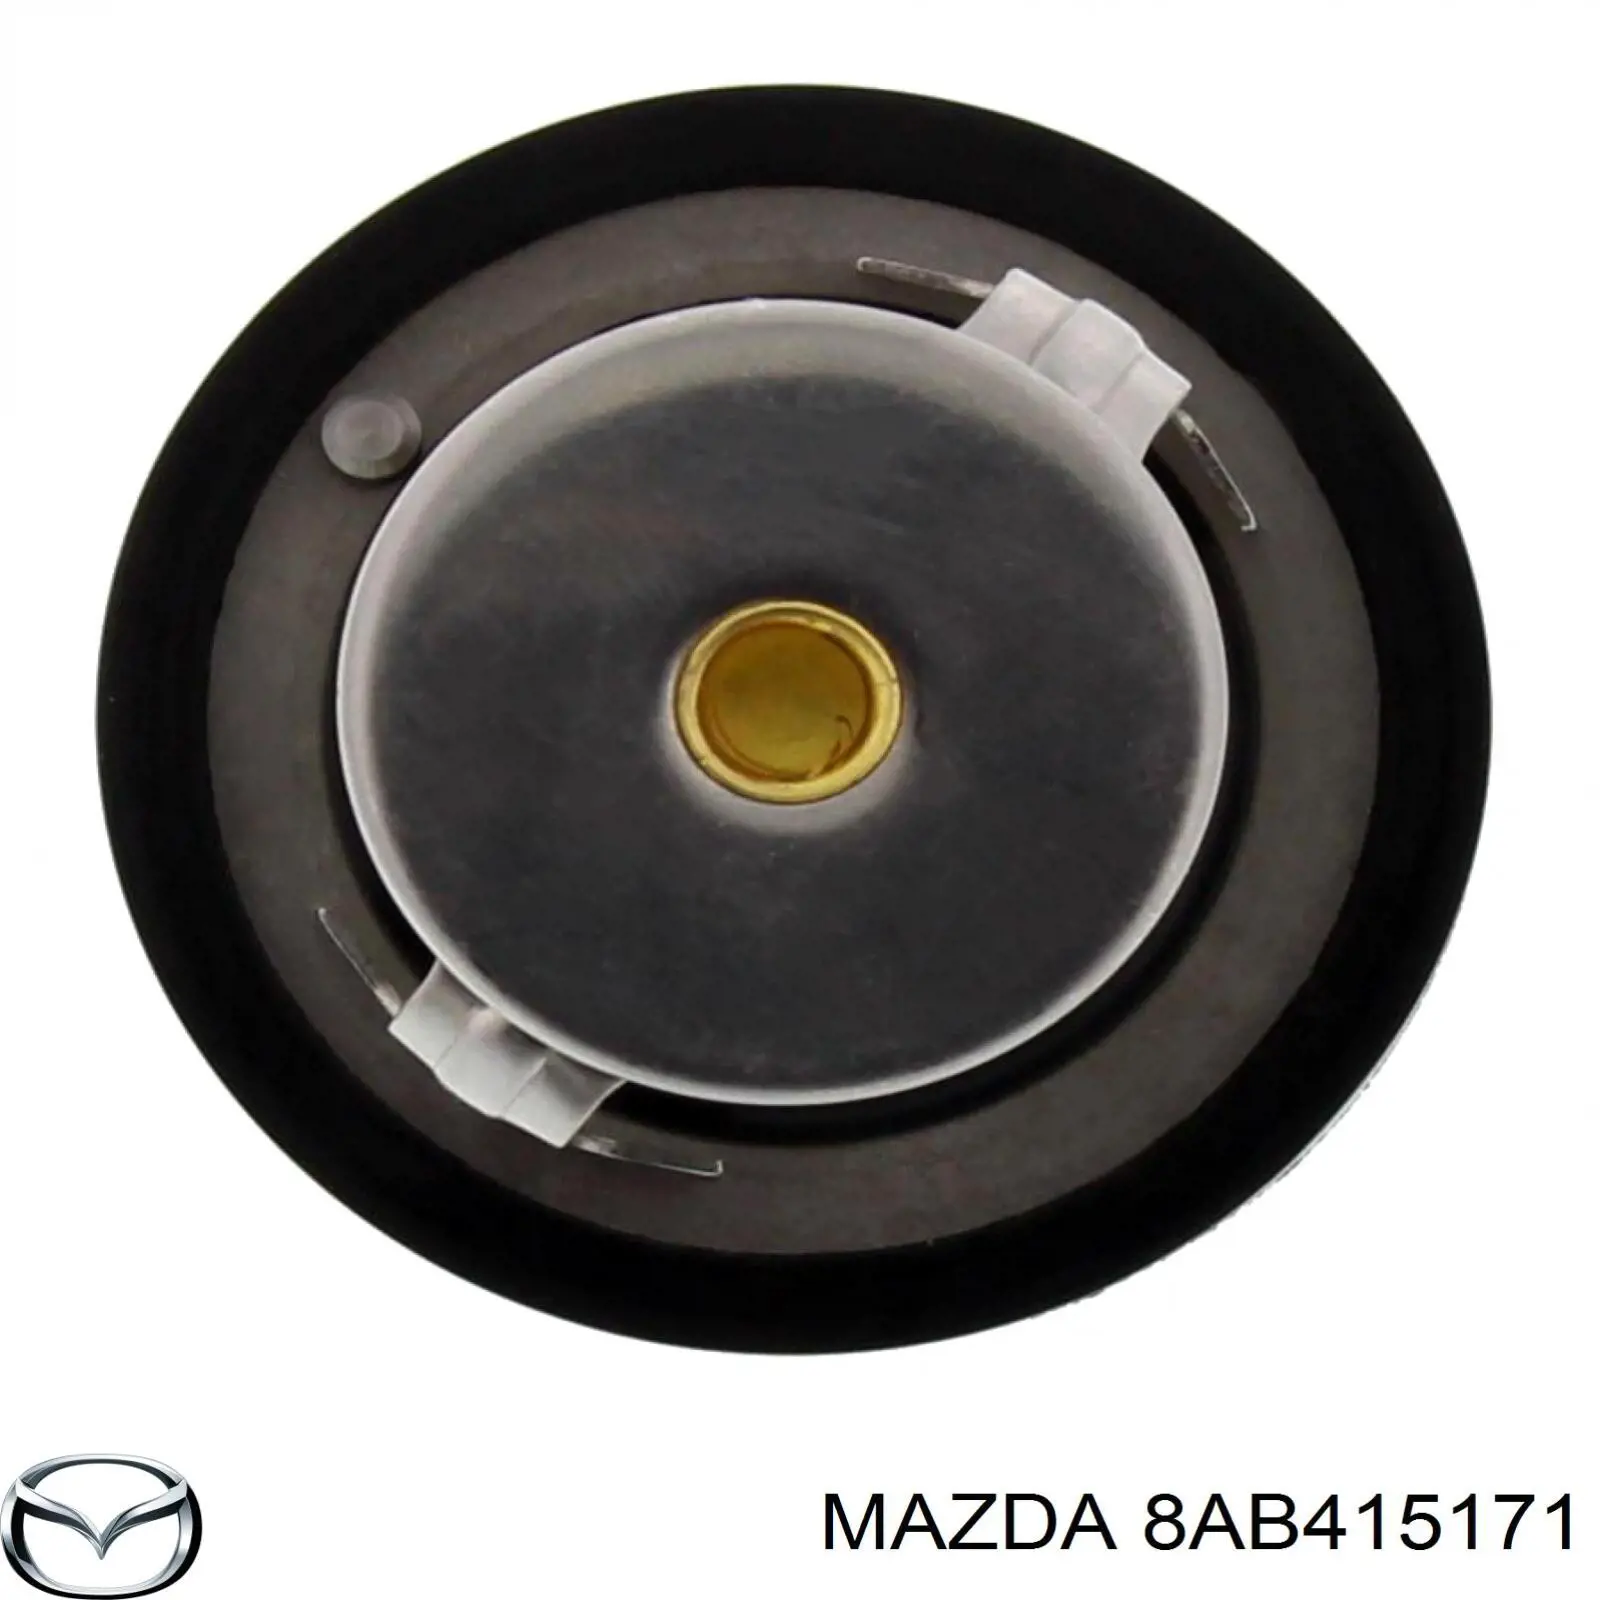 8AB415171 Mazda termostato